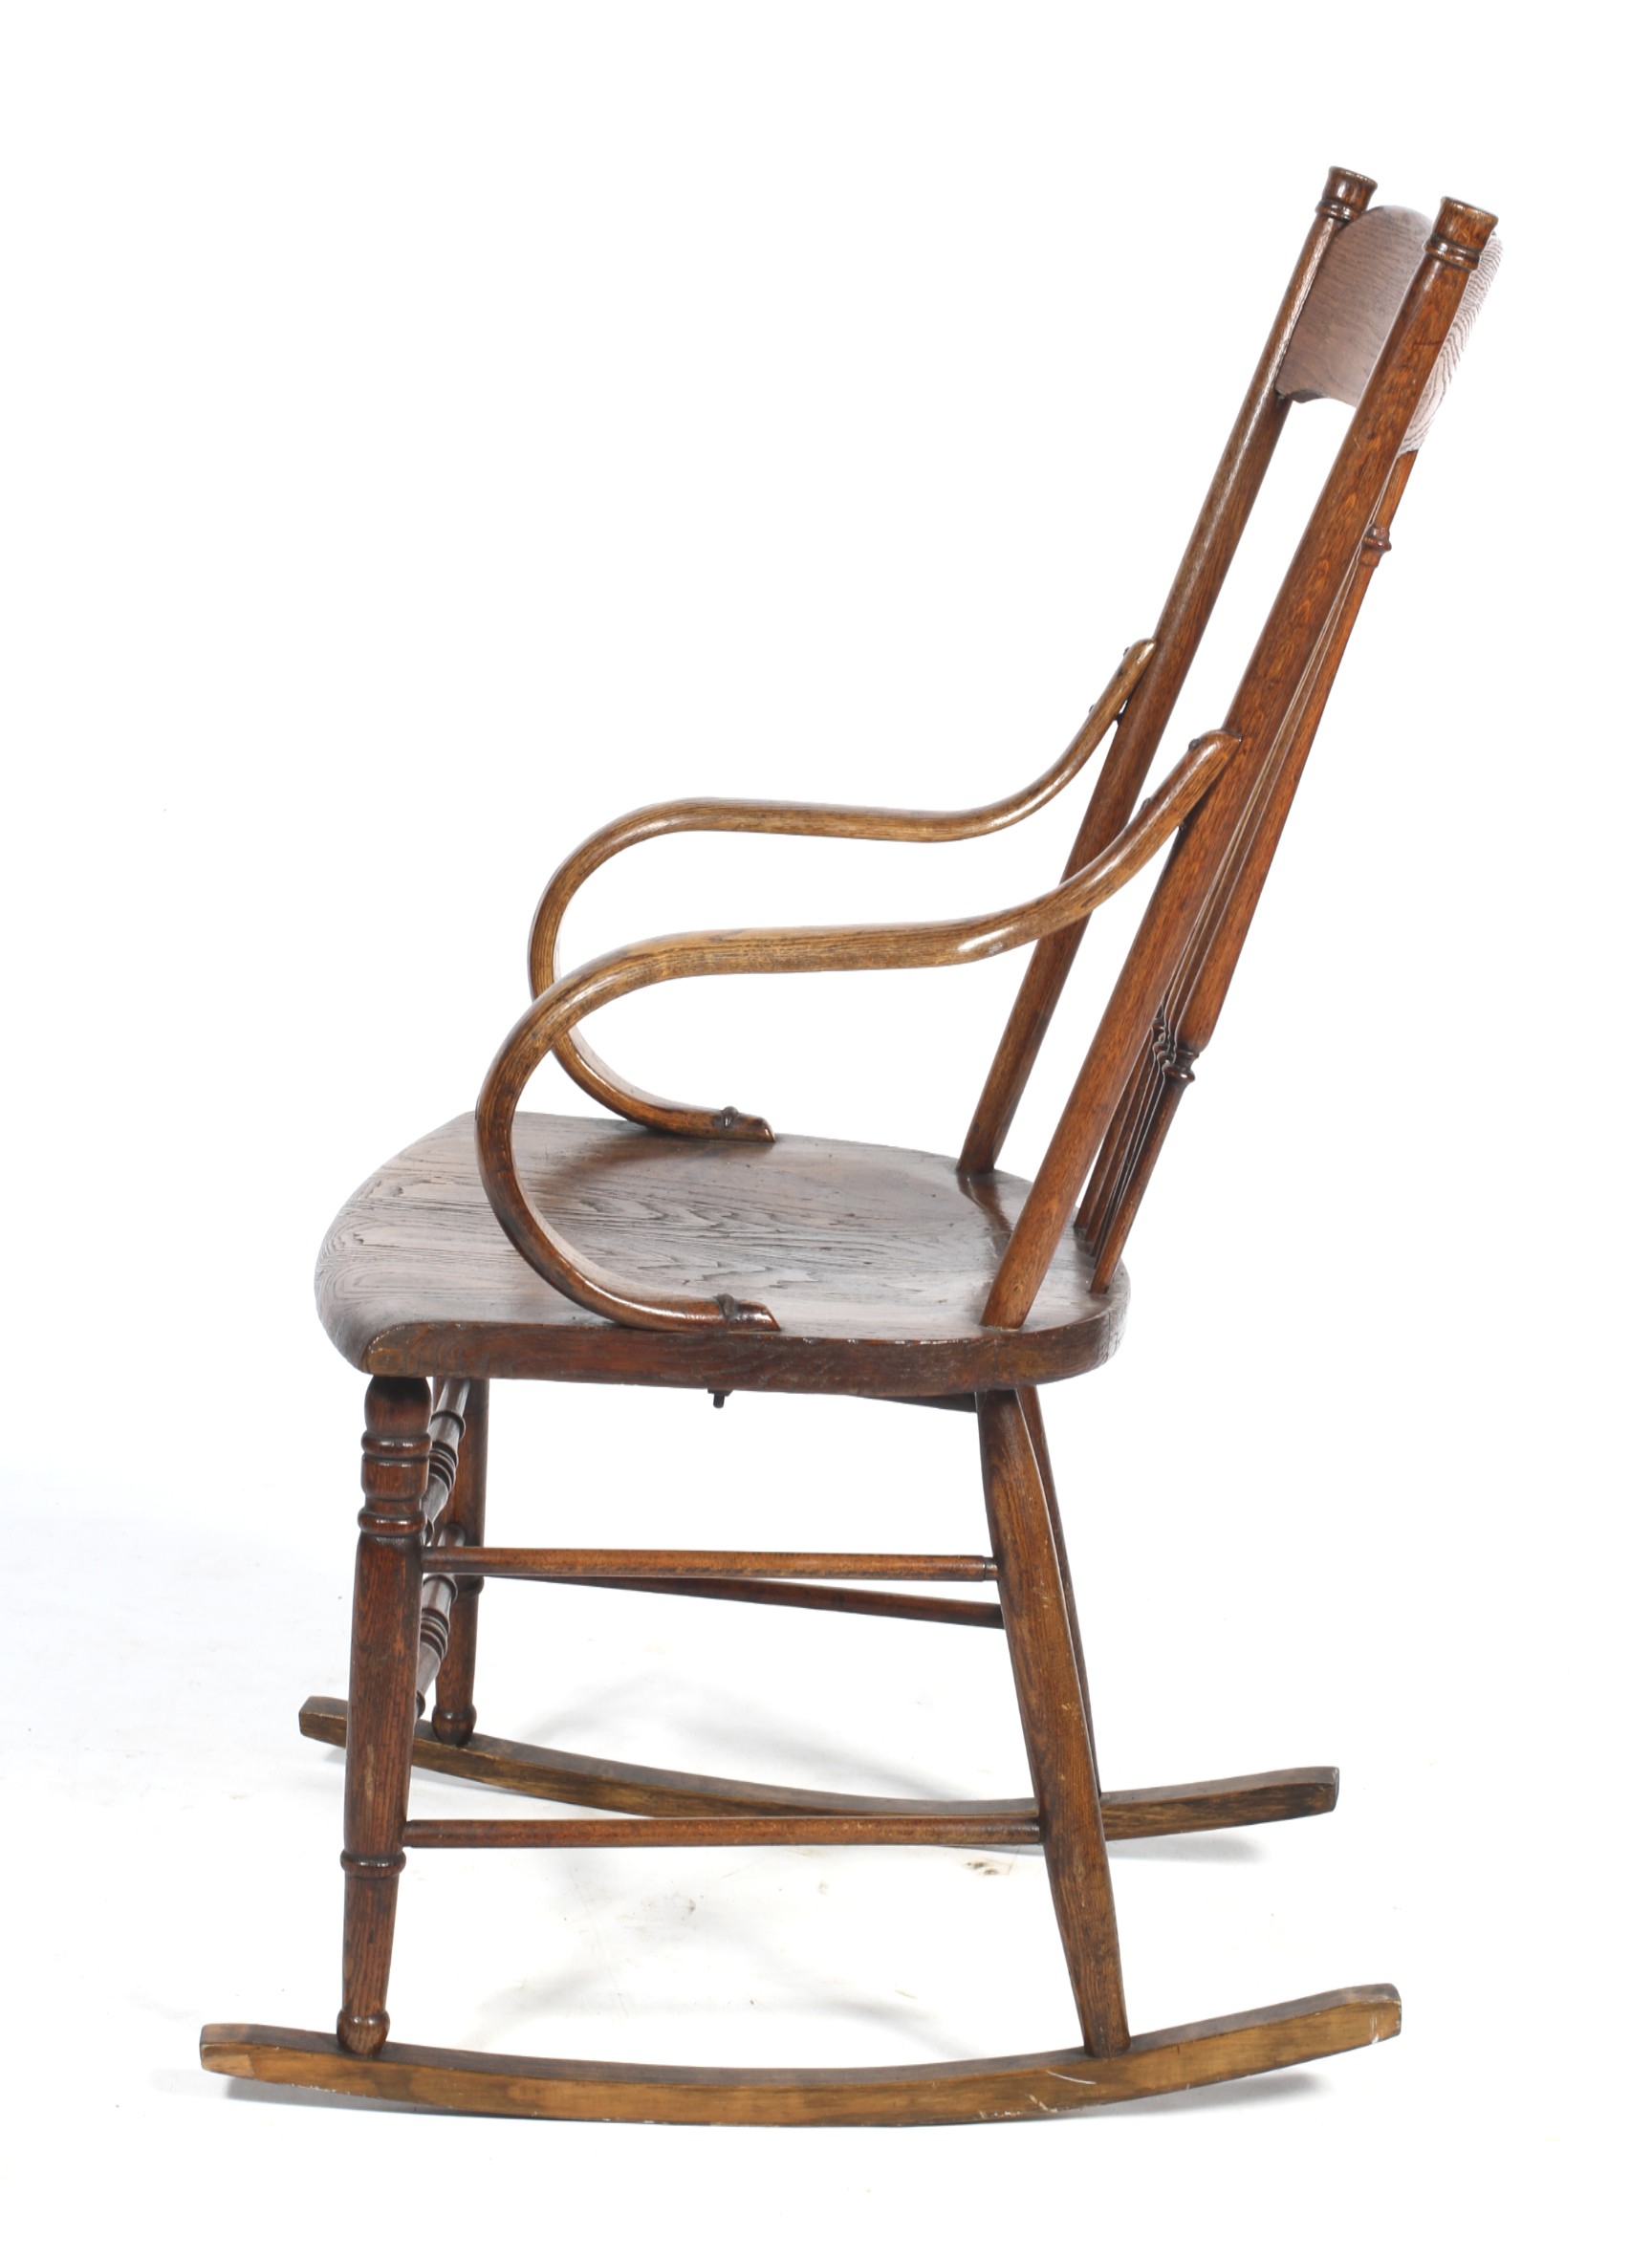 A circa 1900 American oak rocking chair. - Image 2 of 2